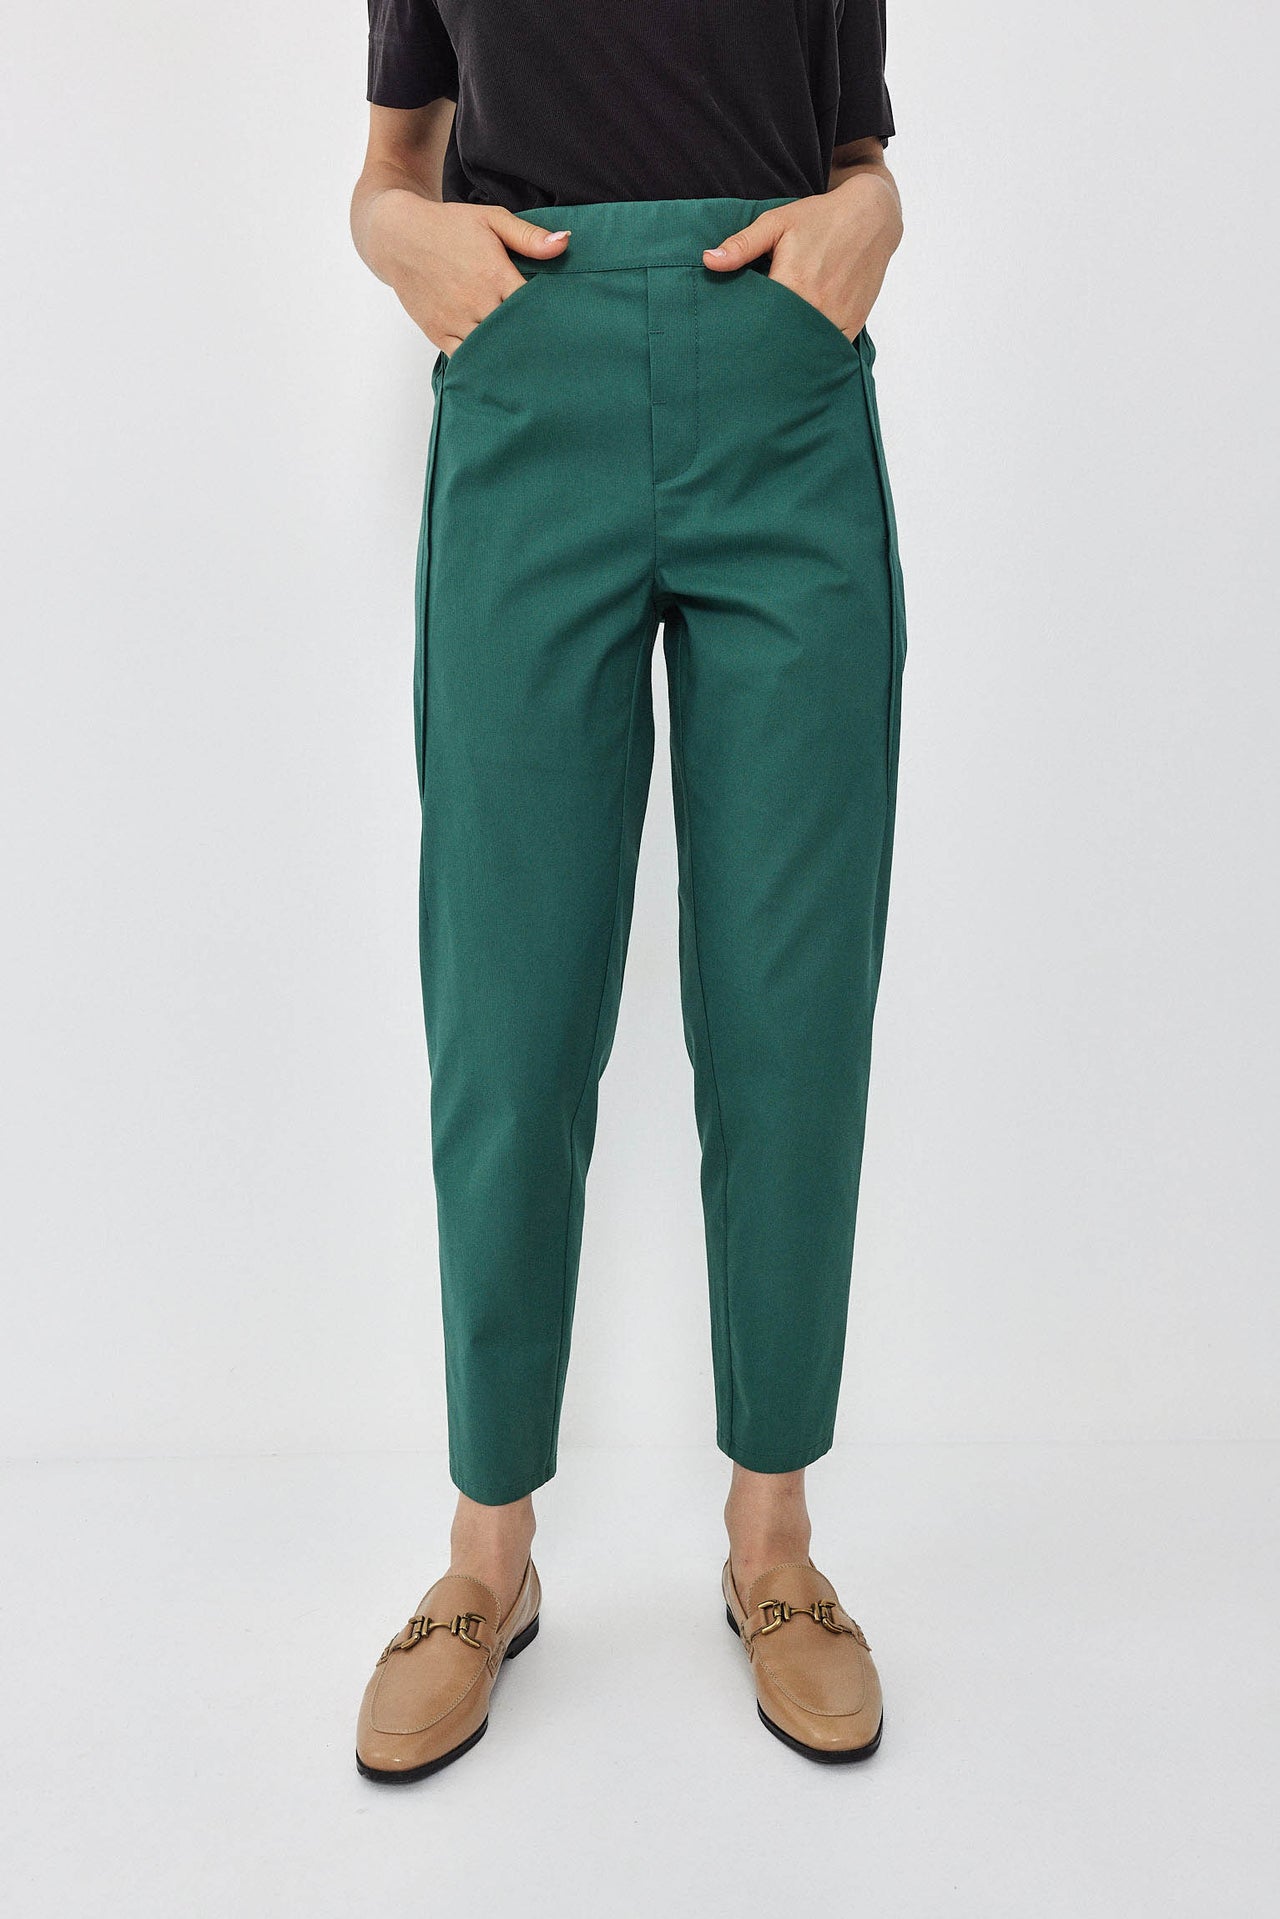 MARTIN Pants S24 (32-42) - Green